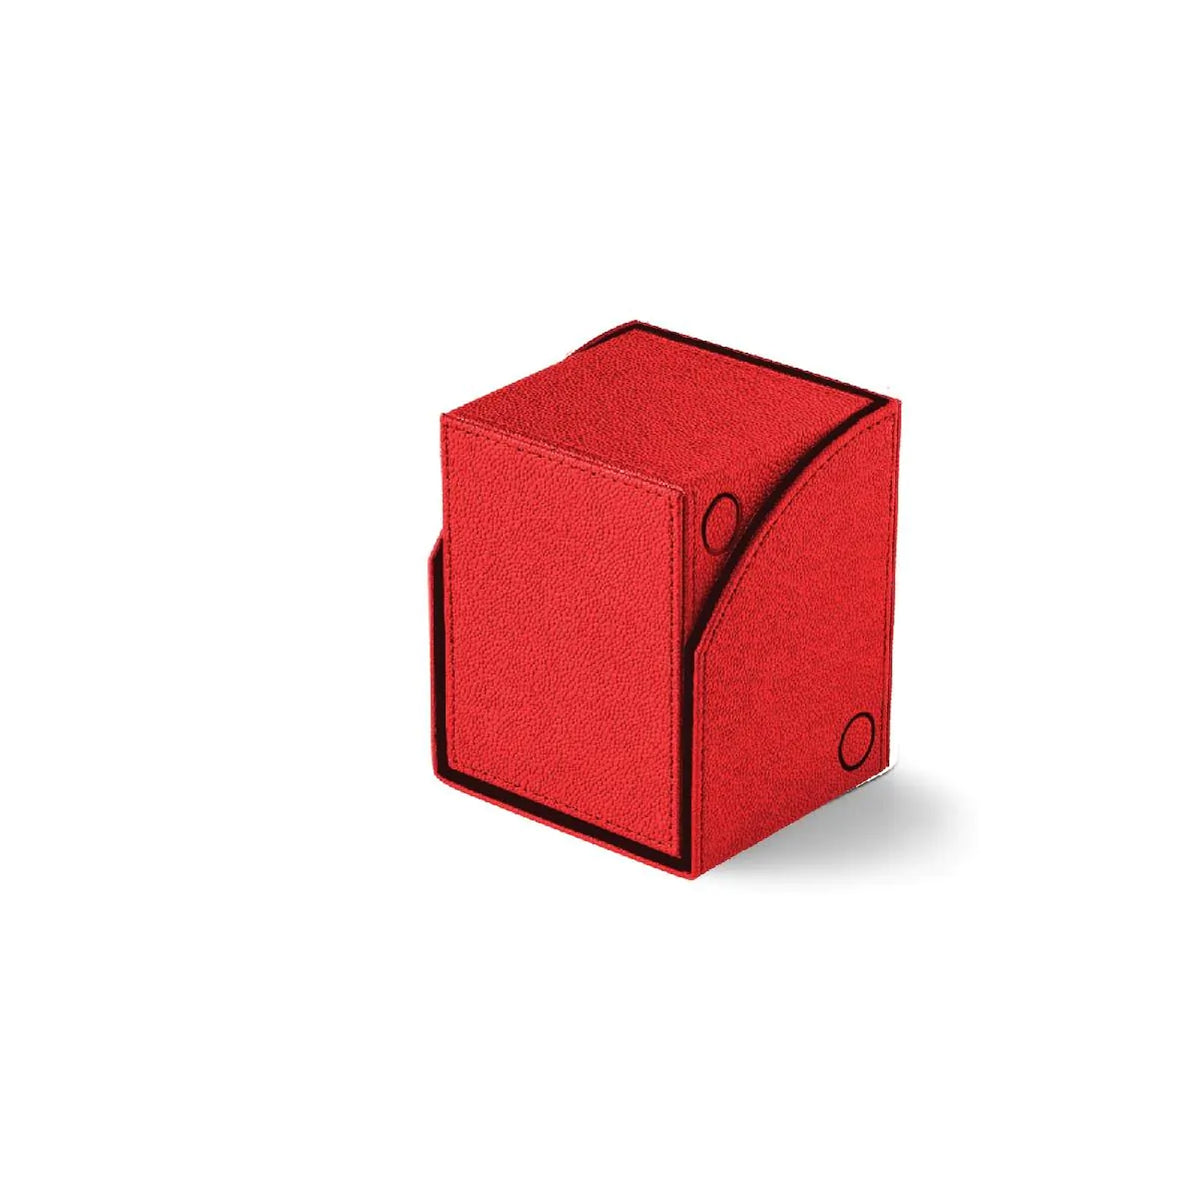 Dragon Shield Deck Box Nest 100 (Red/Black)